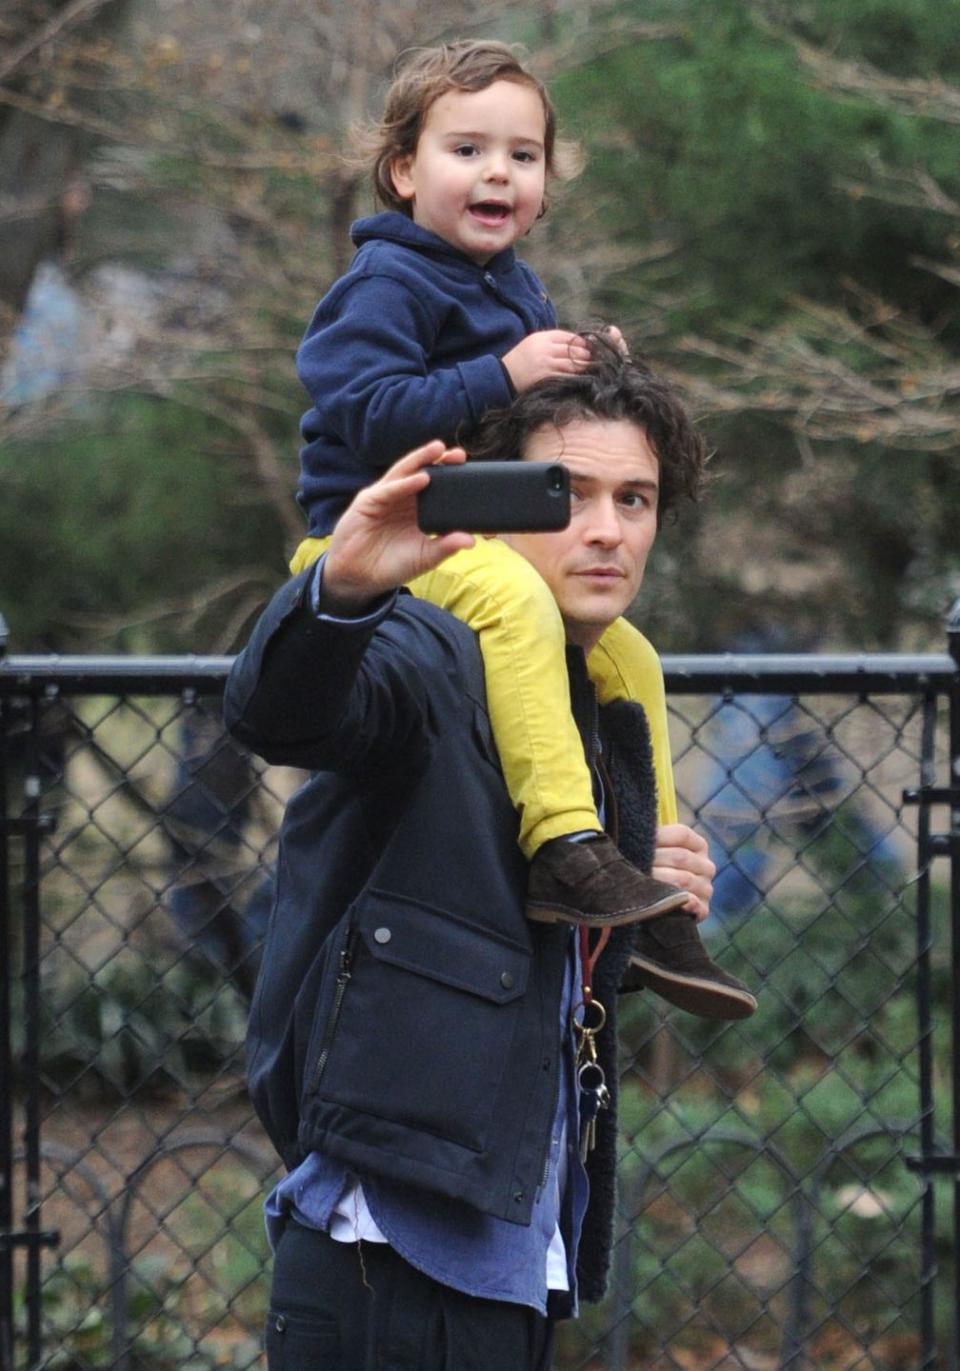 Orlando Bloom with his son, Flynn